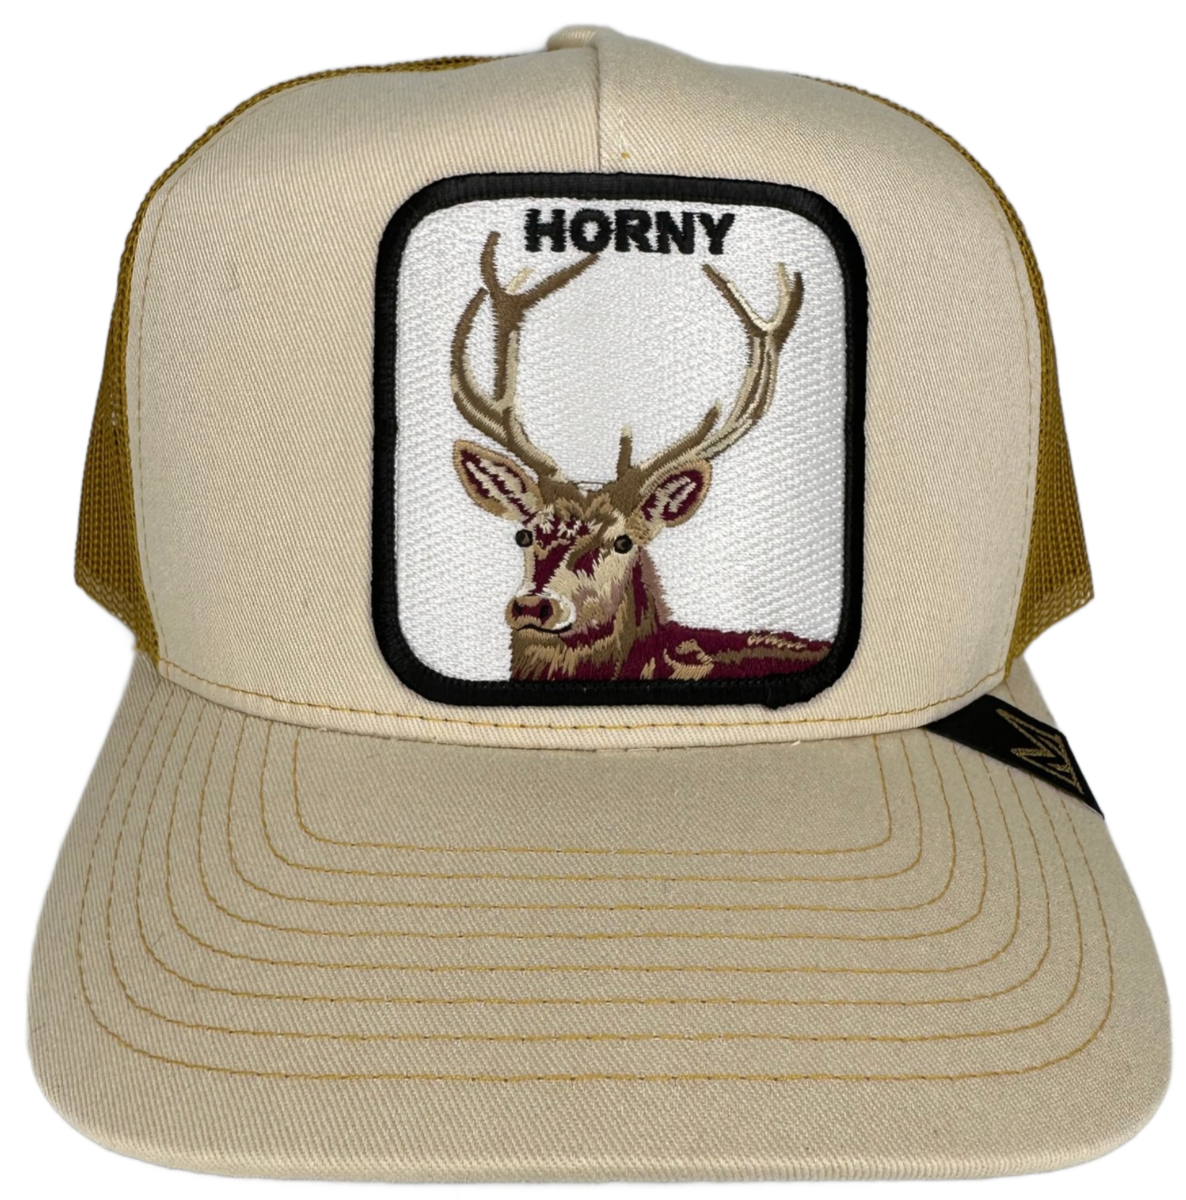 MV Dad Hats - Horny Trucker Hat - Off White/Brown